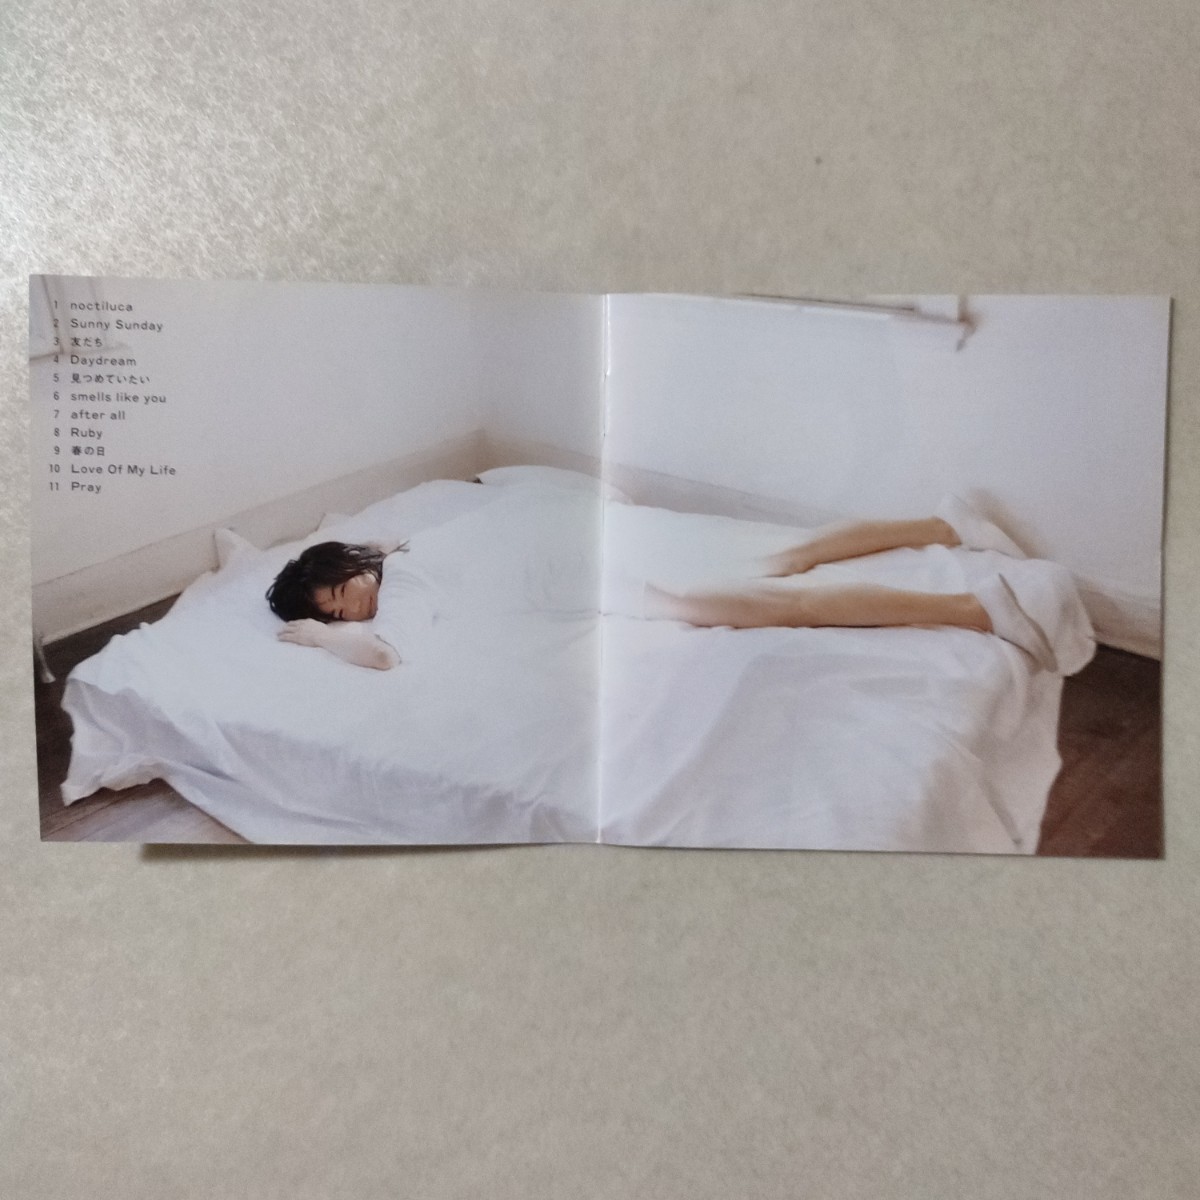 CD 「Love Of Life-Miki Imai」今井美樹